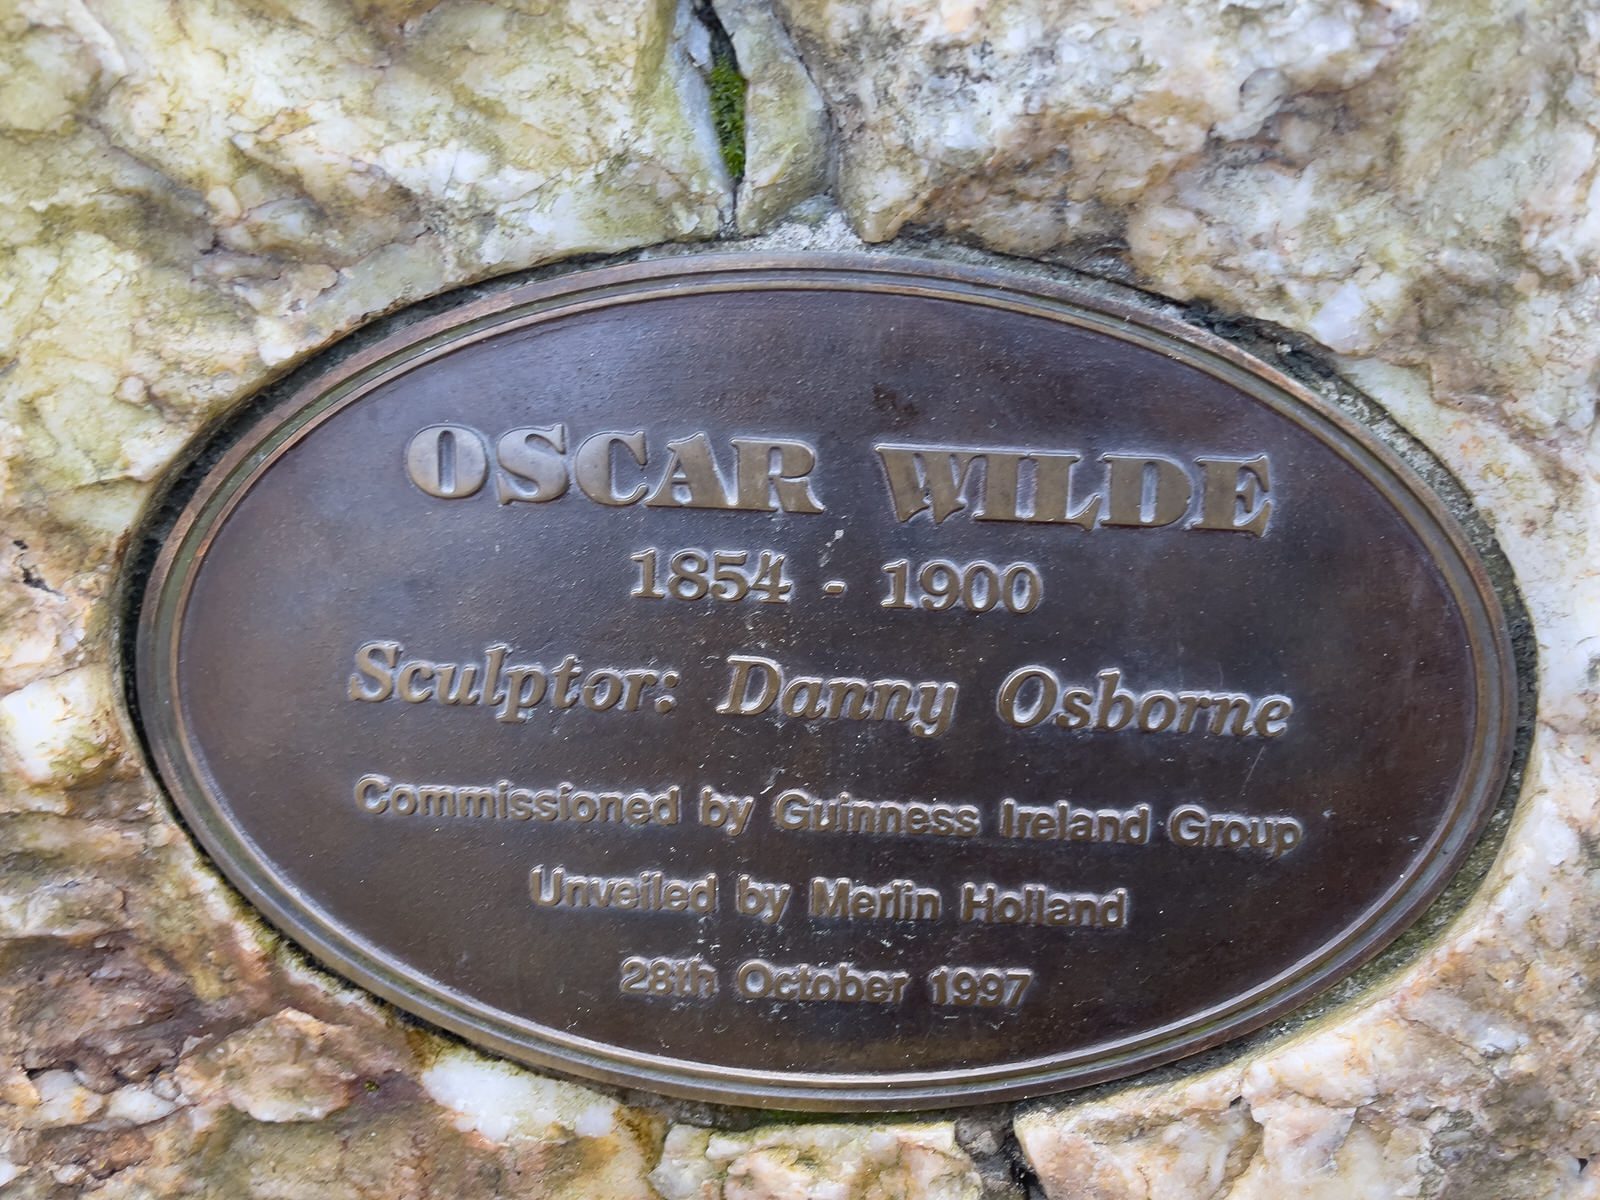 OSCAR WILDE ON A ROCK AND BY DANNY OSBORNE